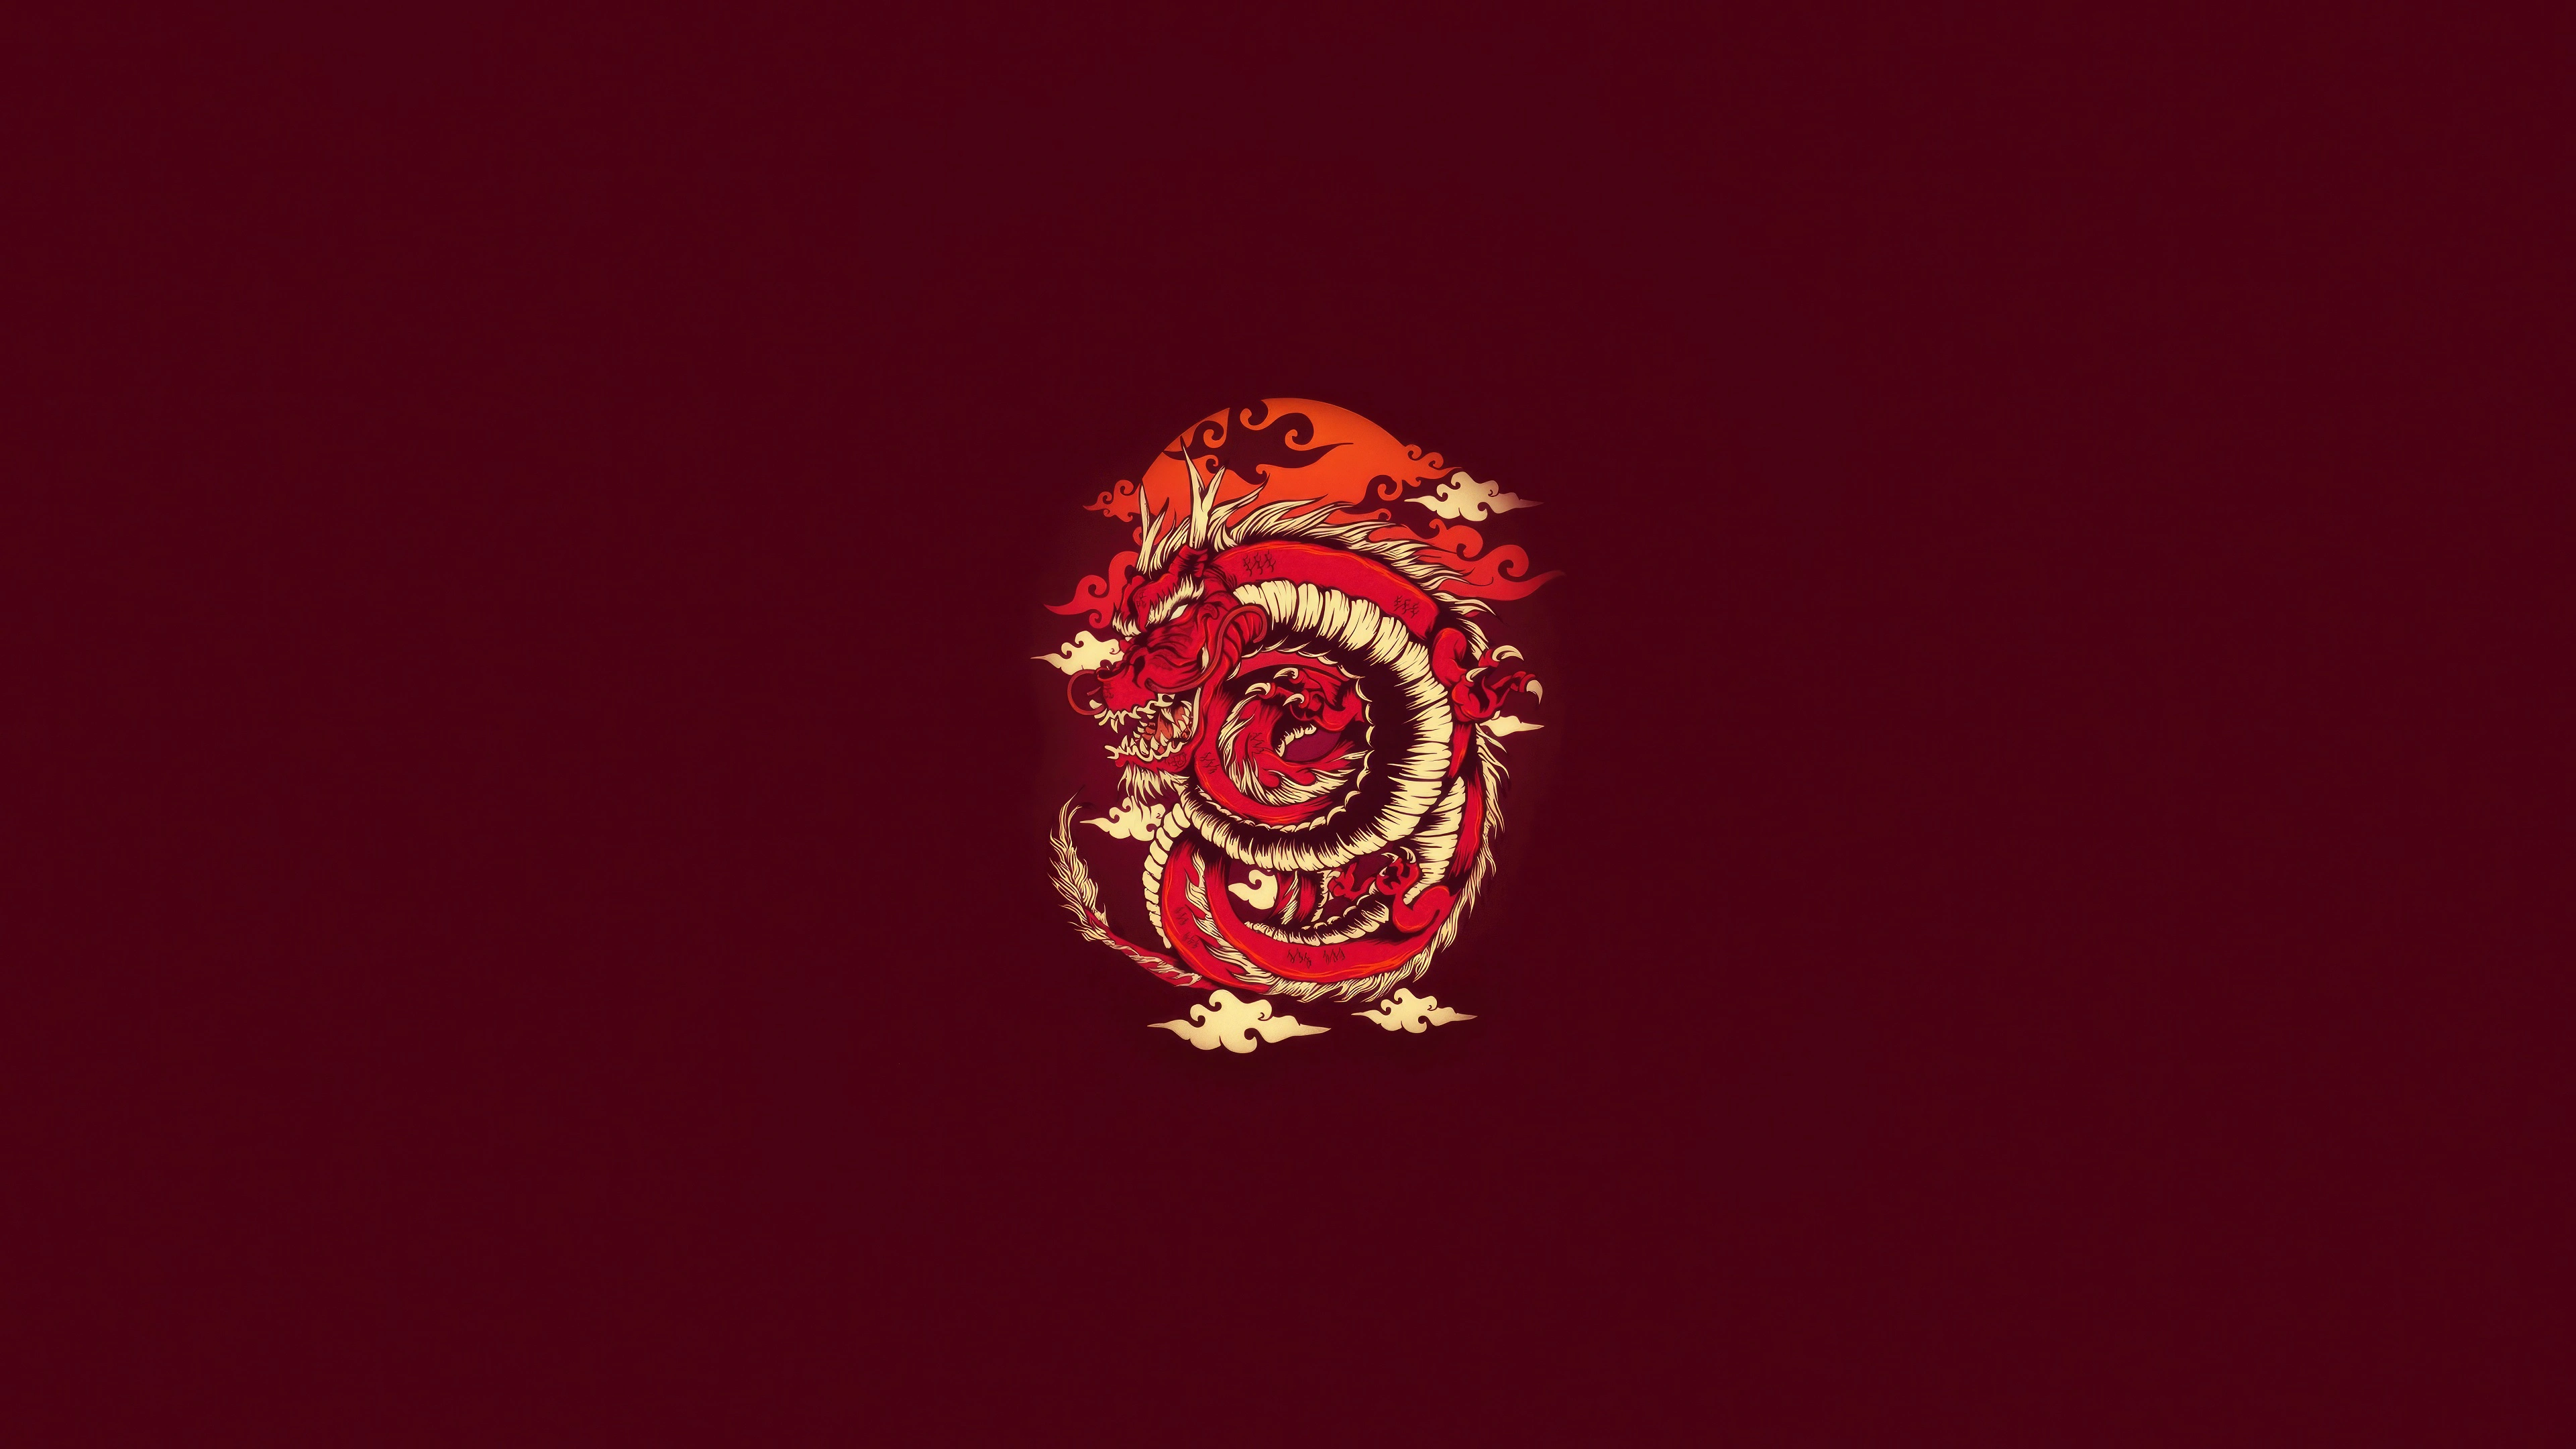 dragon red 4k rj.jpg